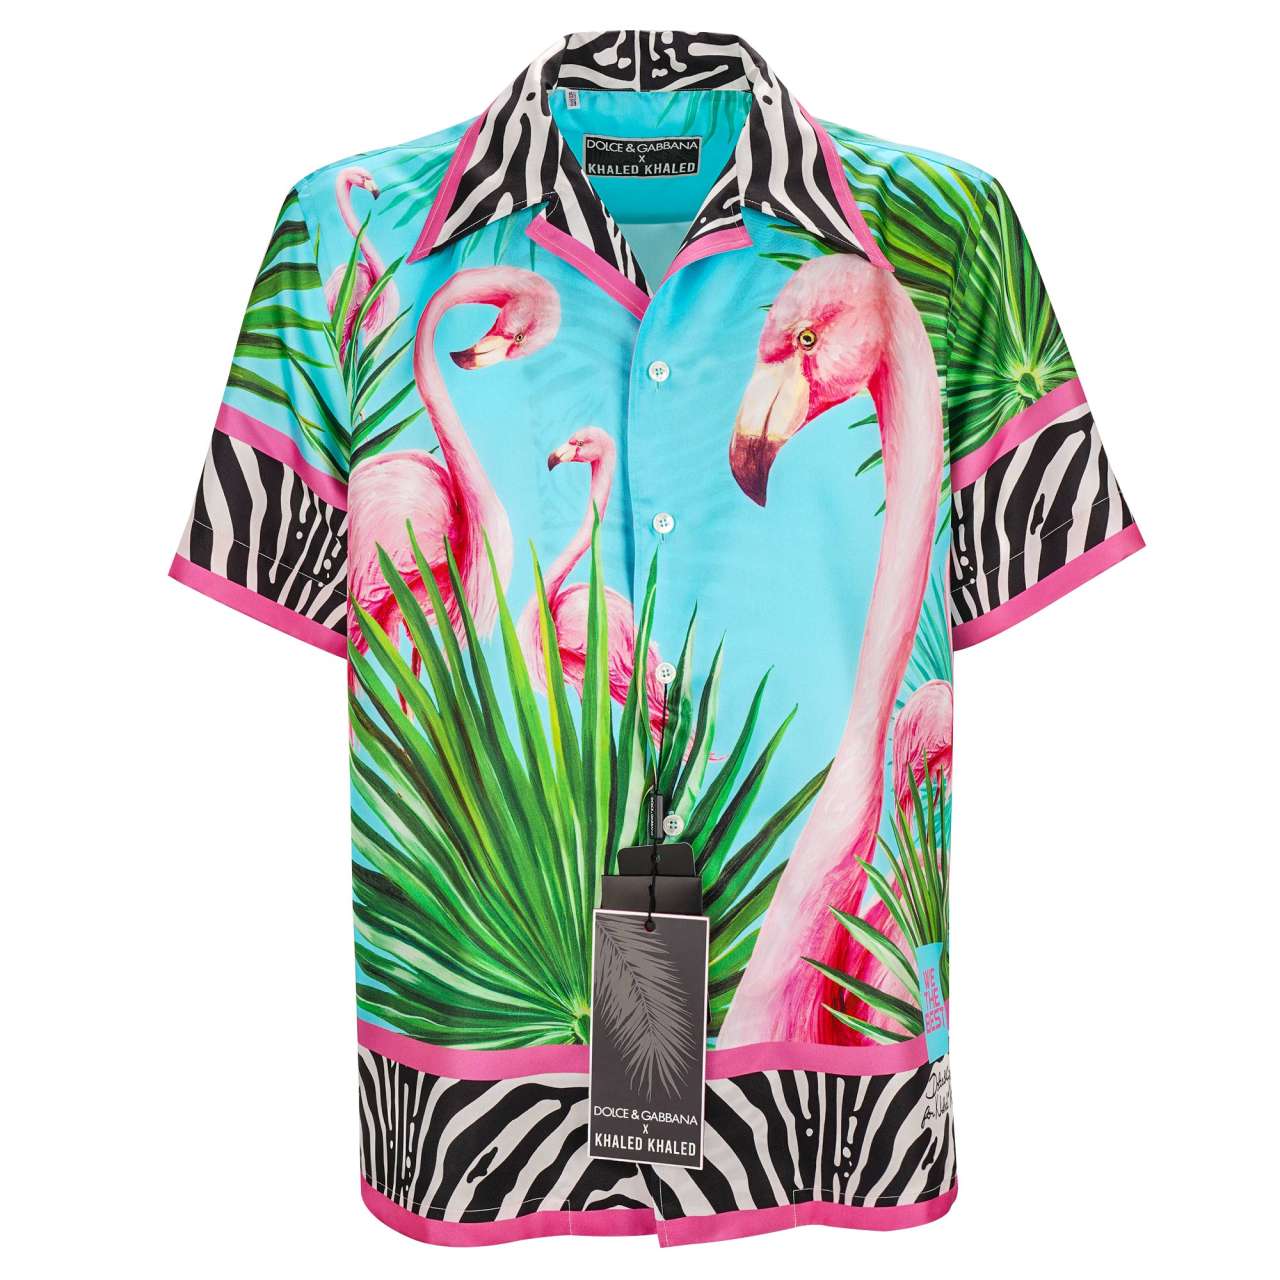 Dolce & Gabbana - DJ Khaled Silk Flamingo Zebra Shirt with Sunglasses and CD 42 For Sale